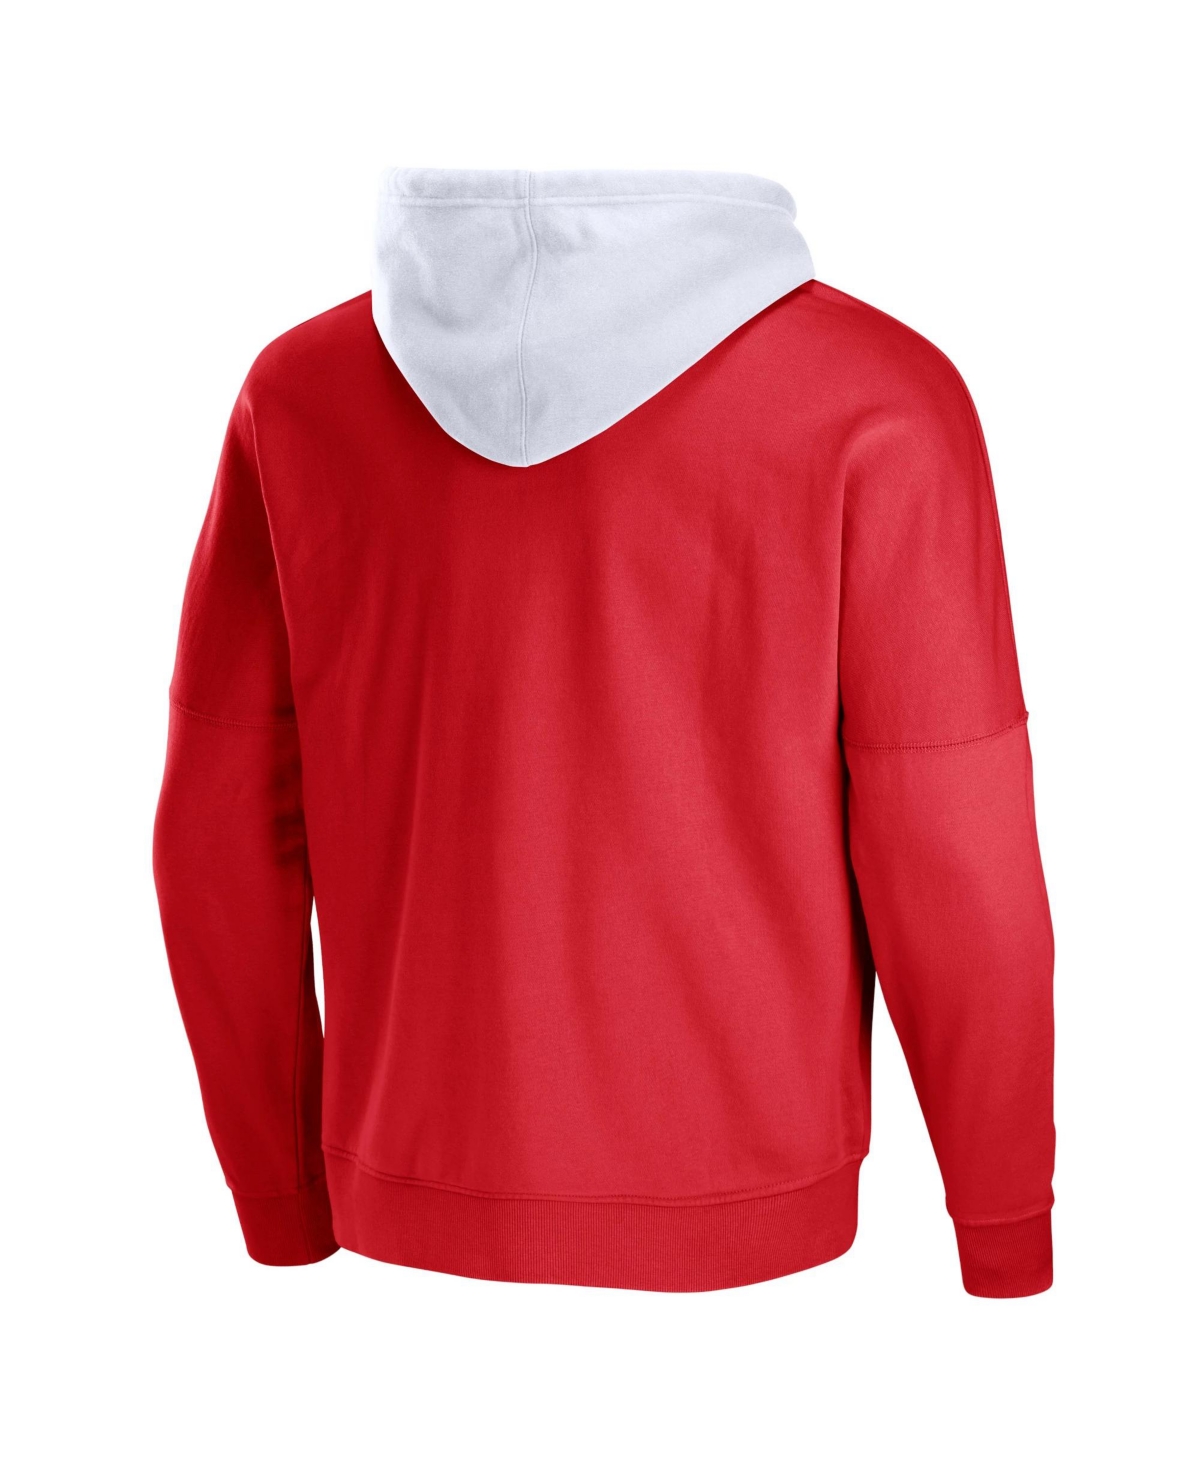 Shop Nfl Properties Men's Nfl X Staple Red Houston Texans Oversized Gridiron Vintage-like Wash Pullover Hoodie